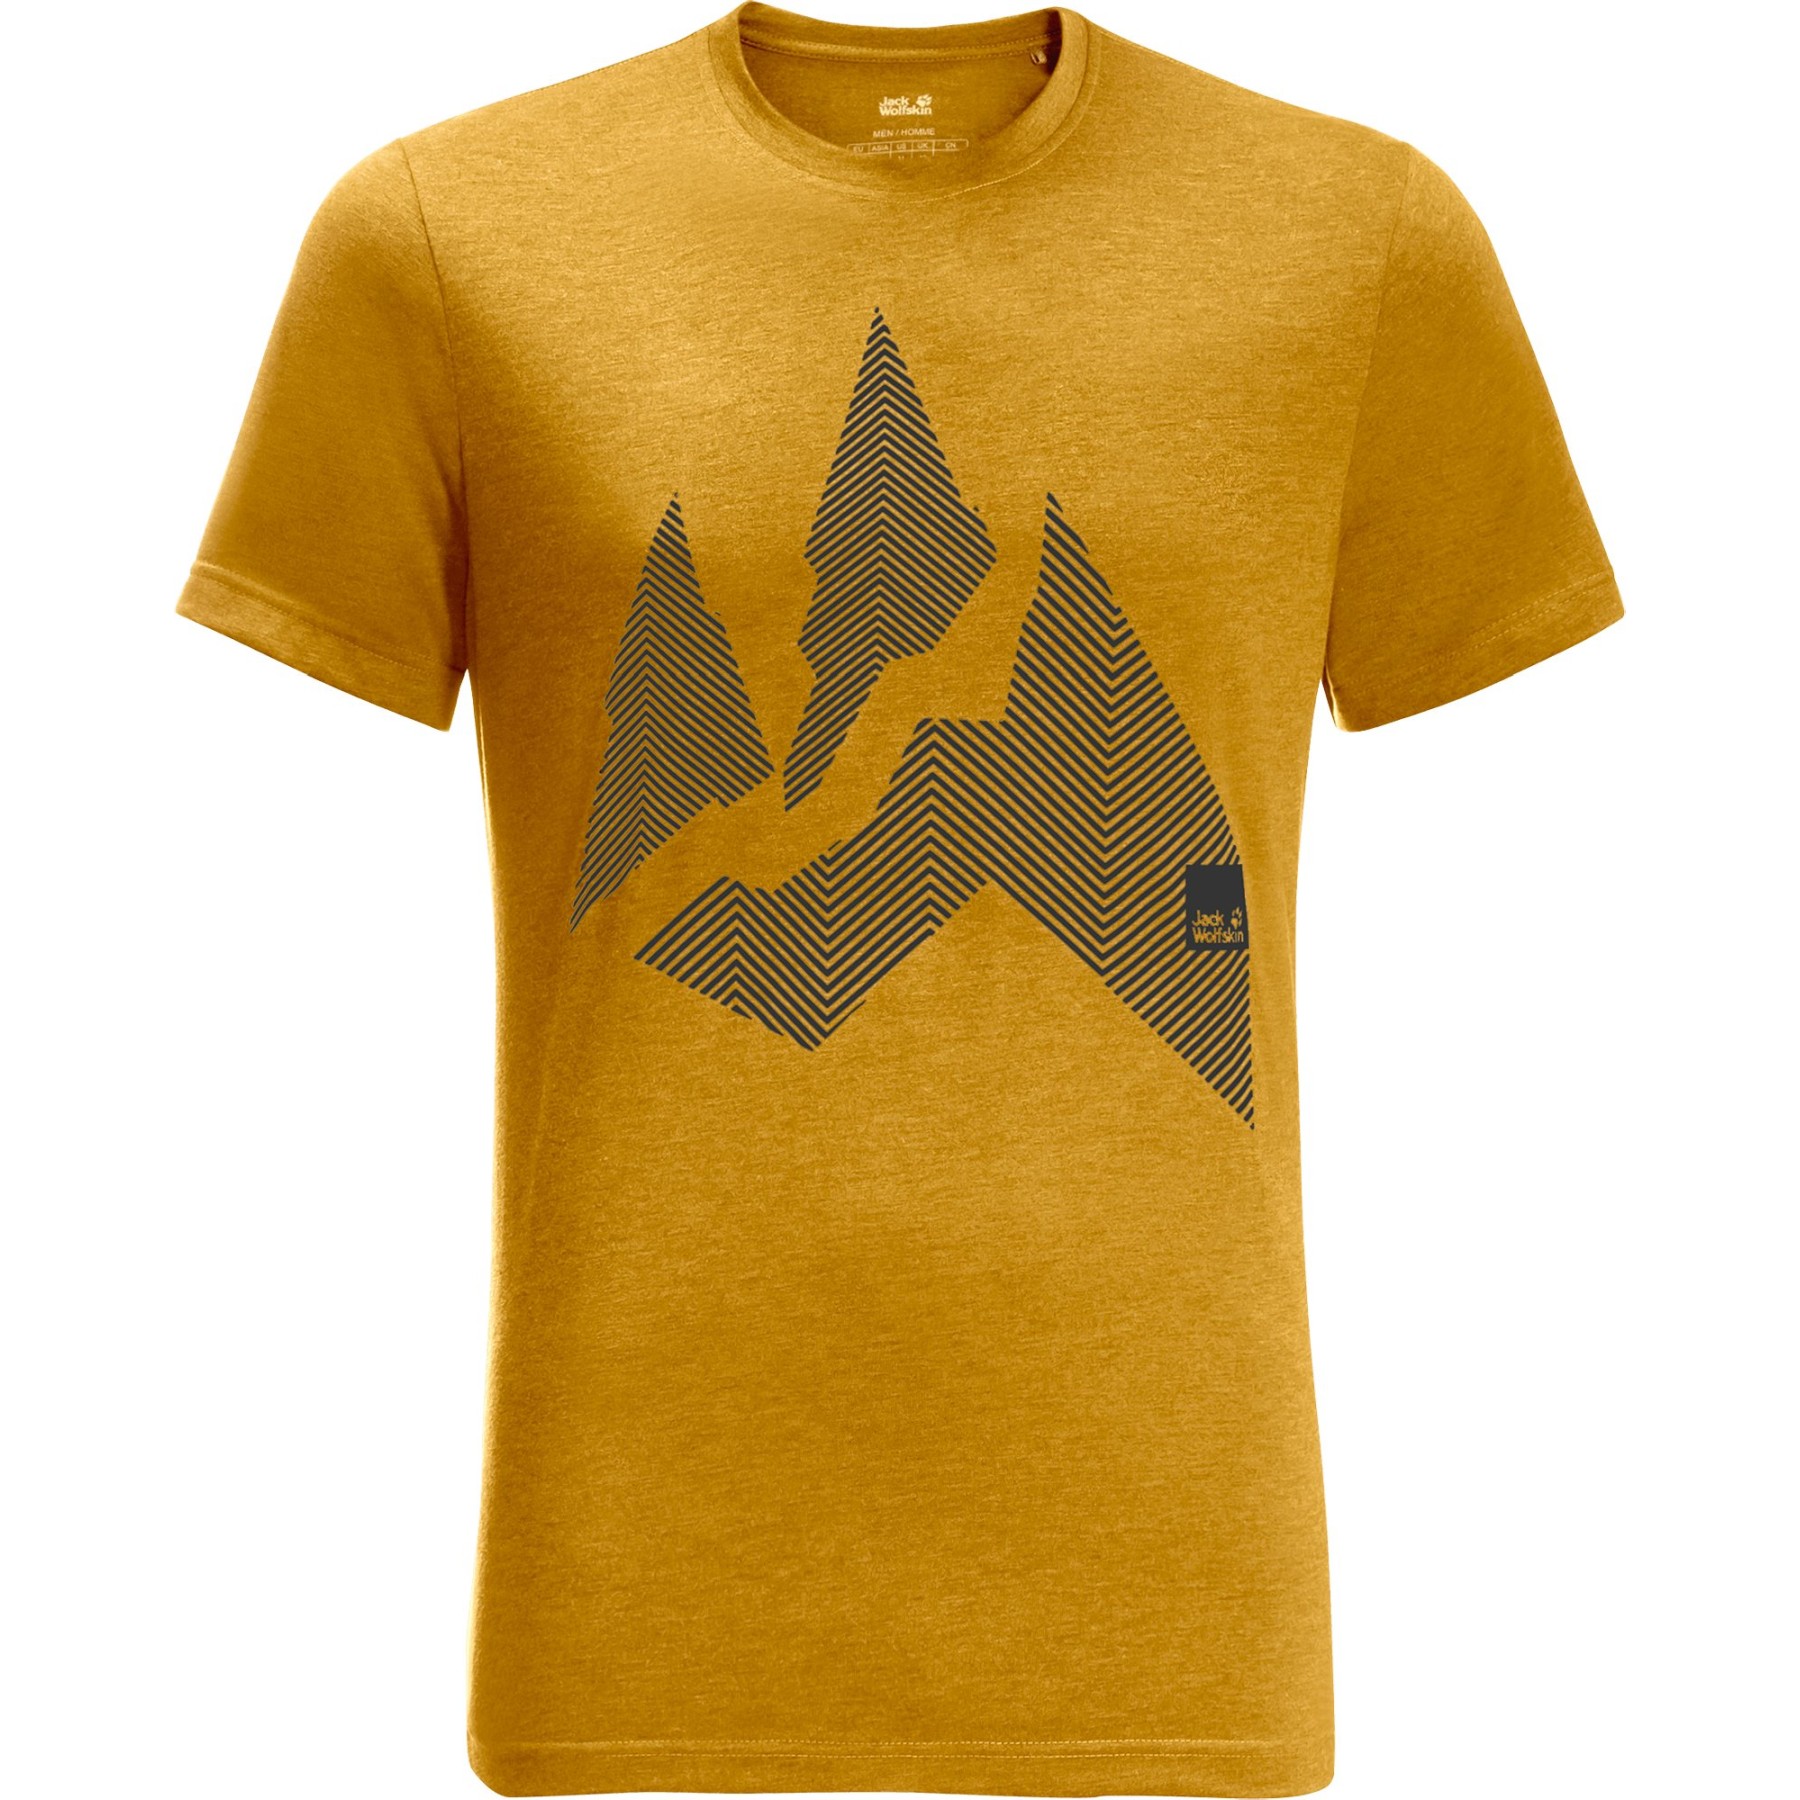 Picture of Jack Wolfskin Nature Mountain T-Shirt Men - golden yellow